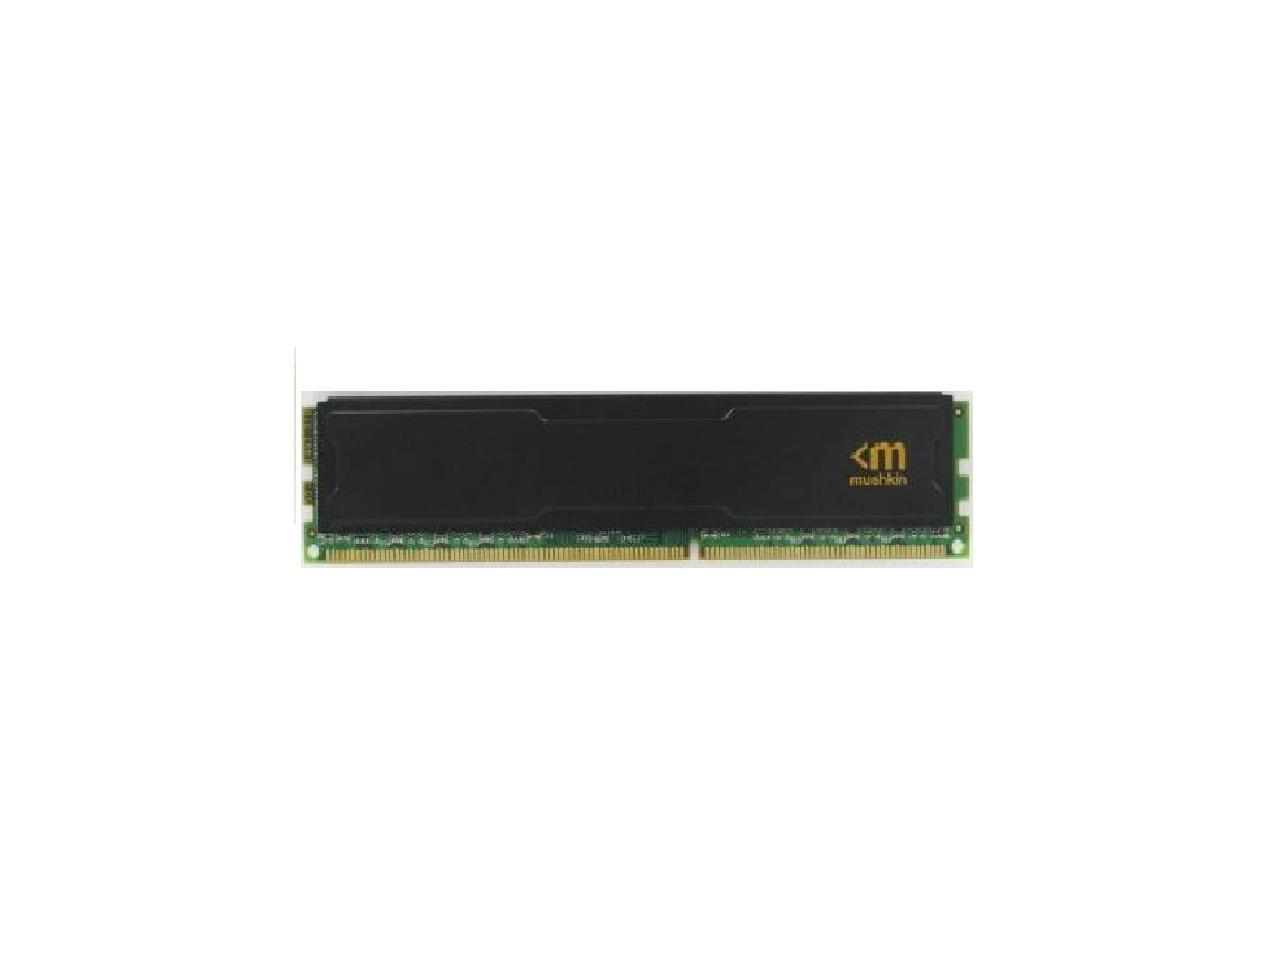 Mushkin 4GB Stealth DDR3 1600MHz PC3L-12800 Desktop Memory Model MST3U160BM4G